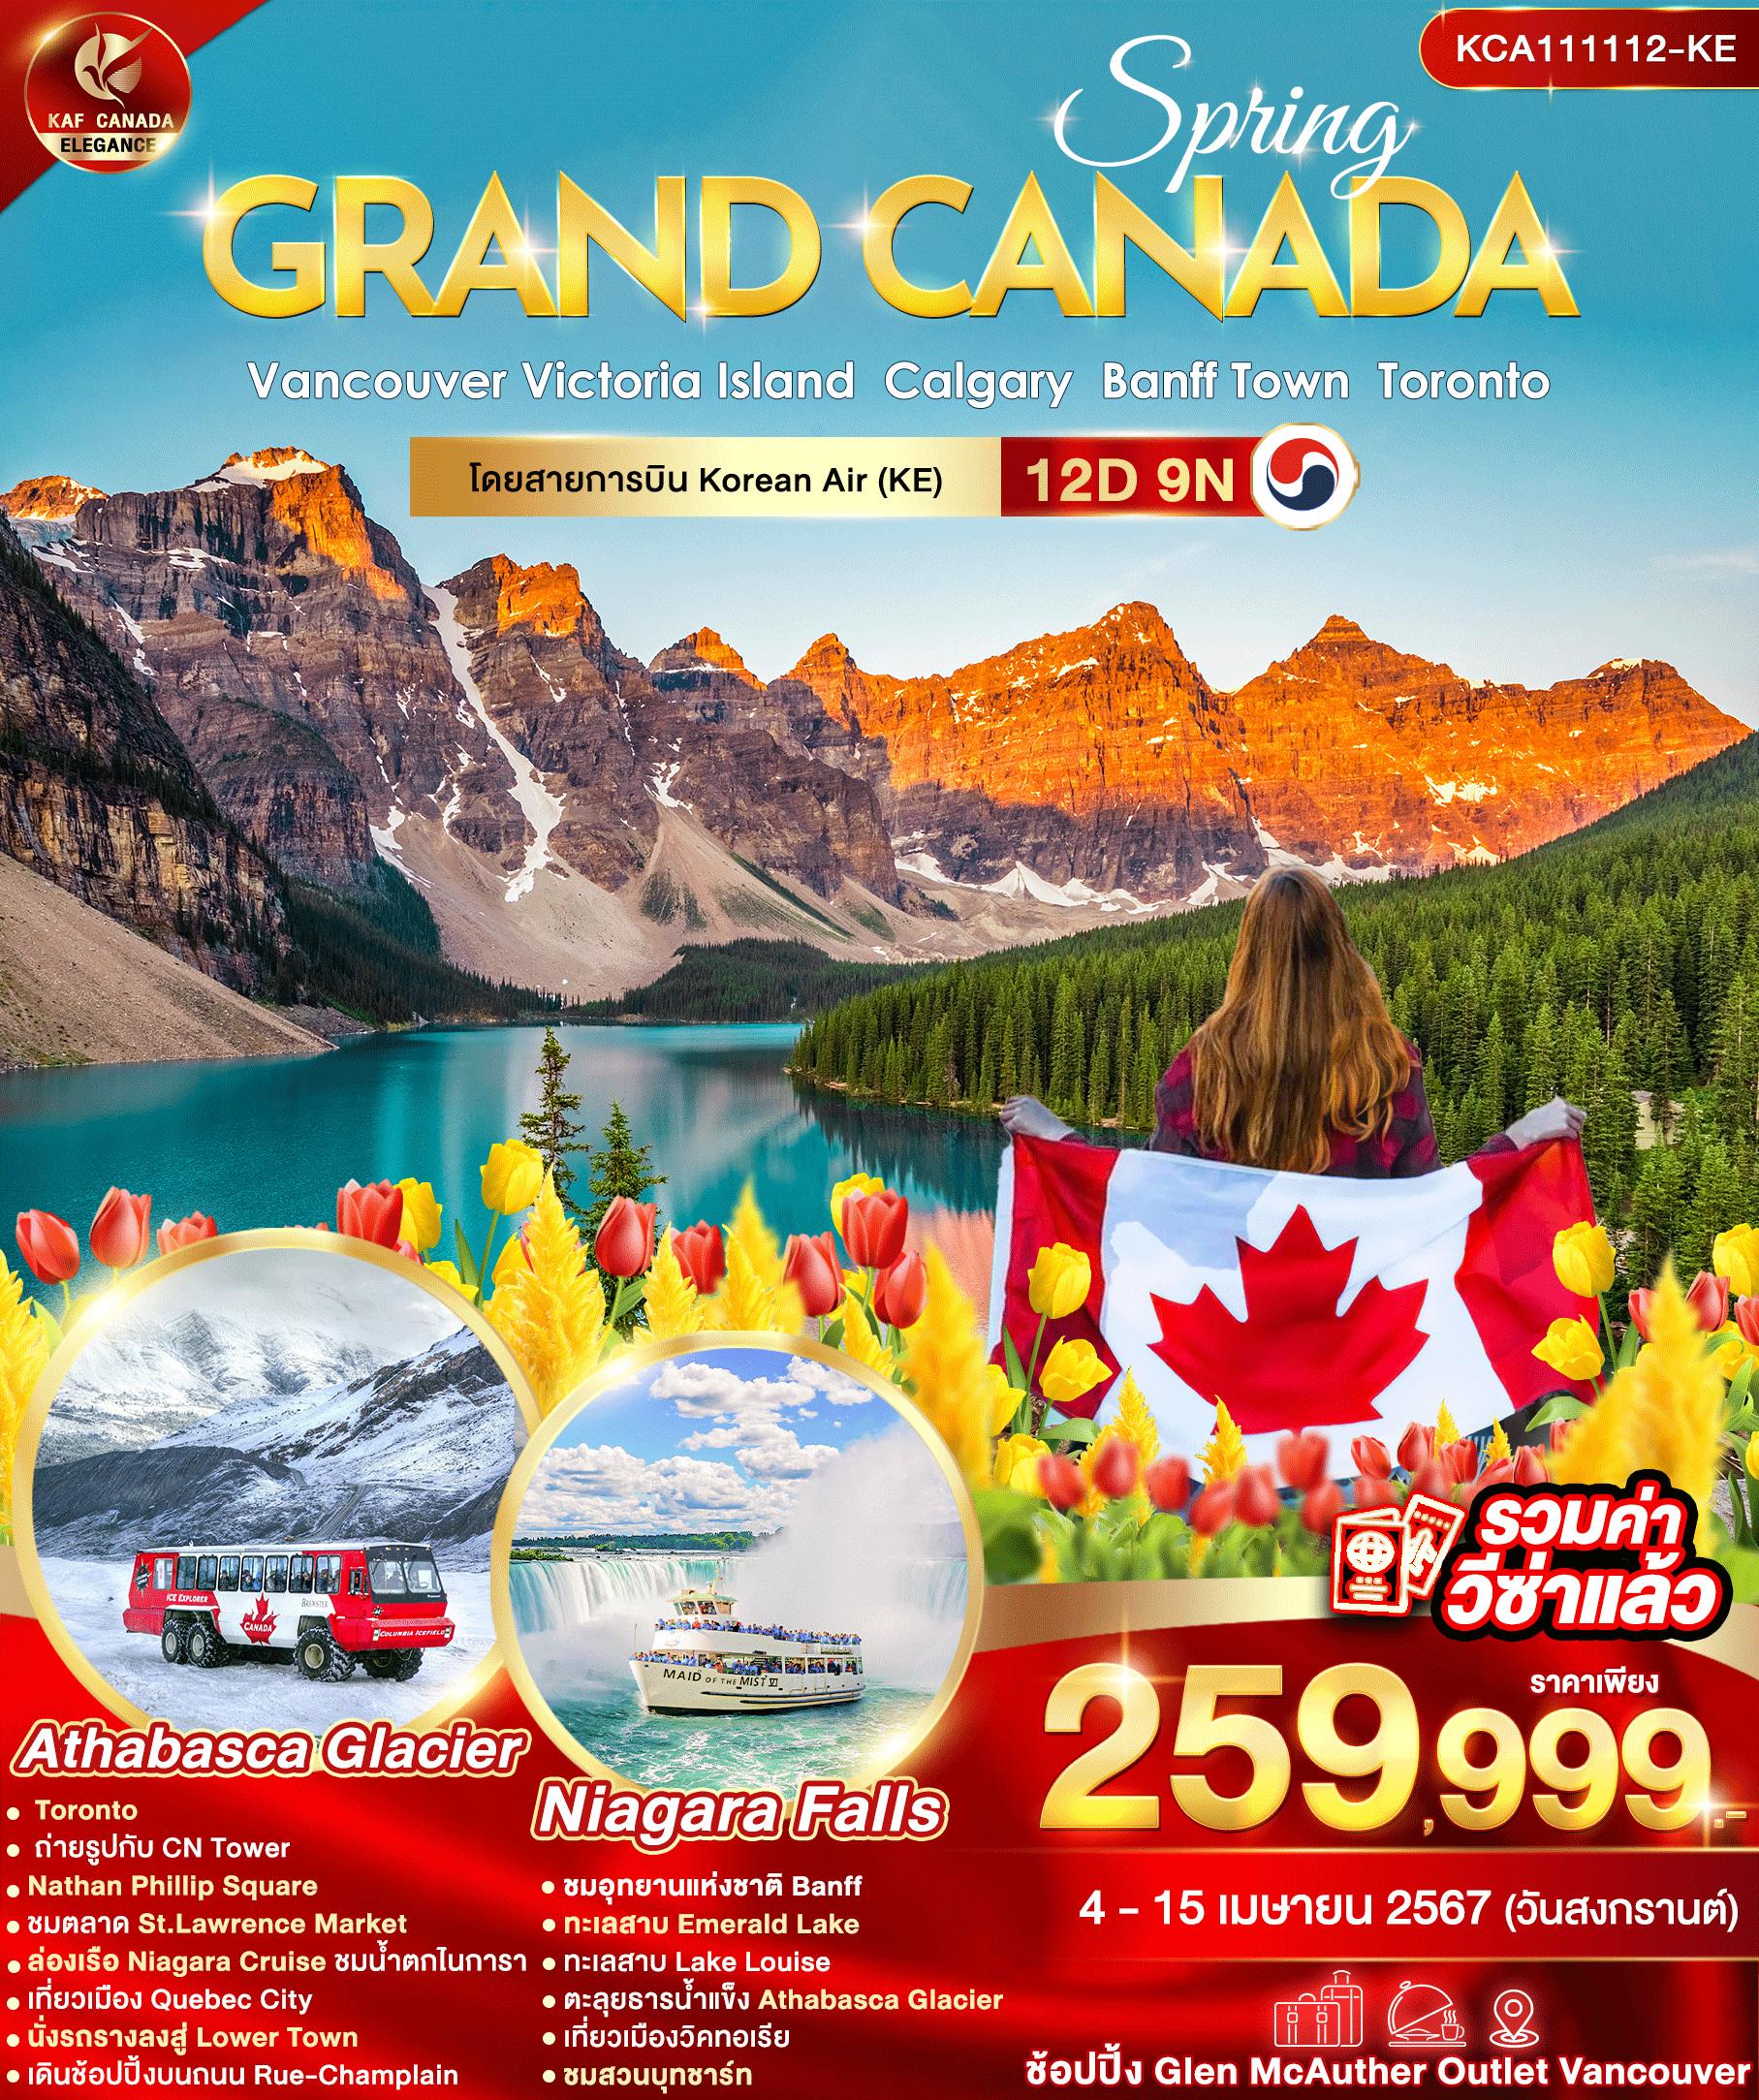 Grand Canada Spring 12D9N by KE